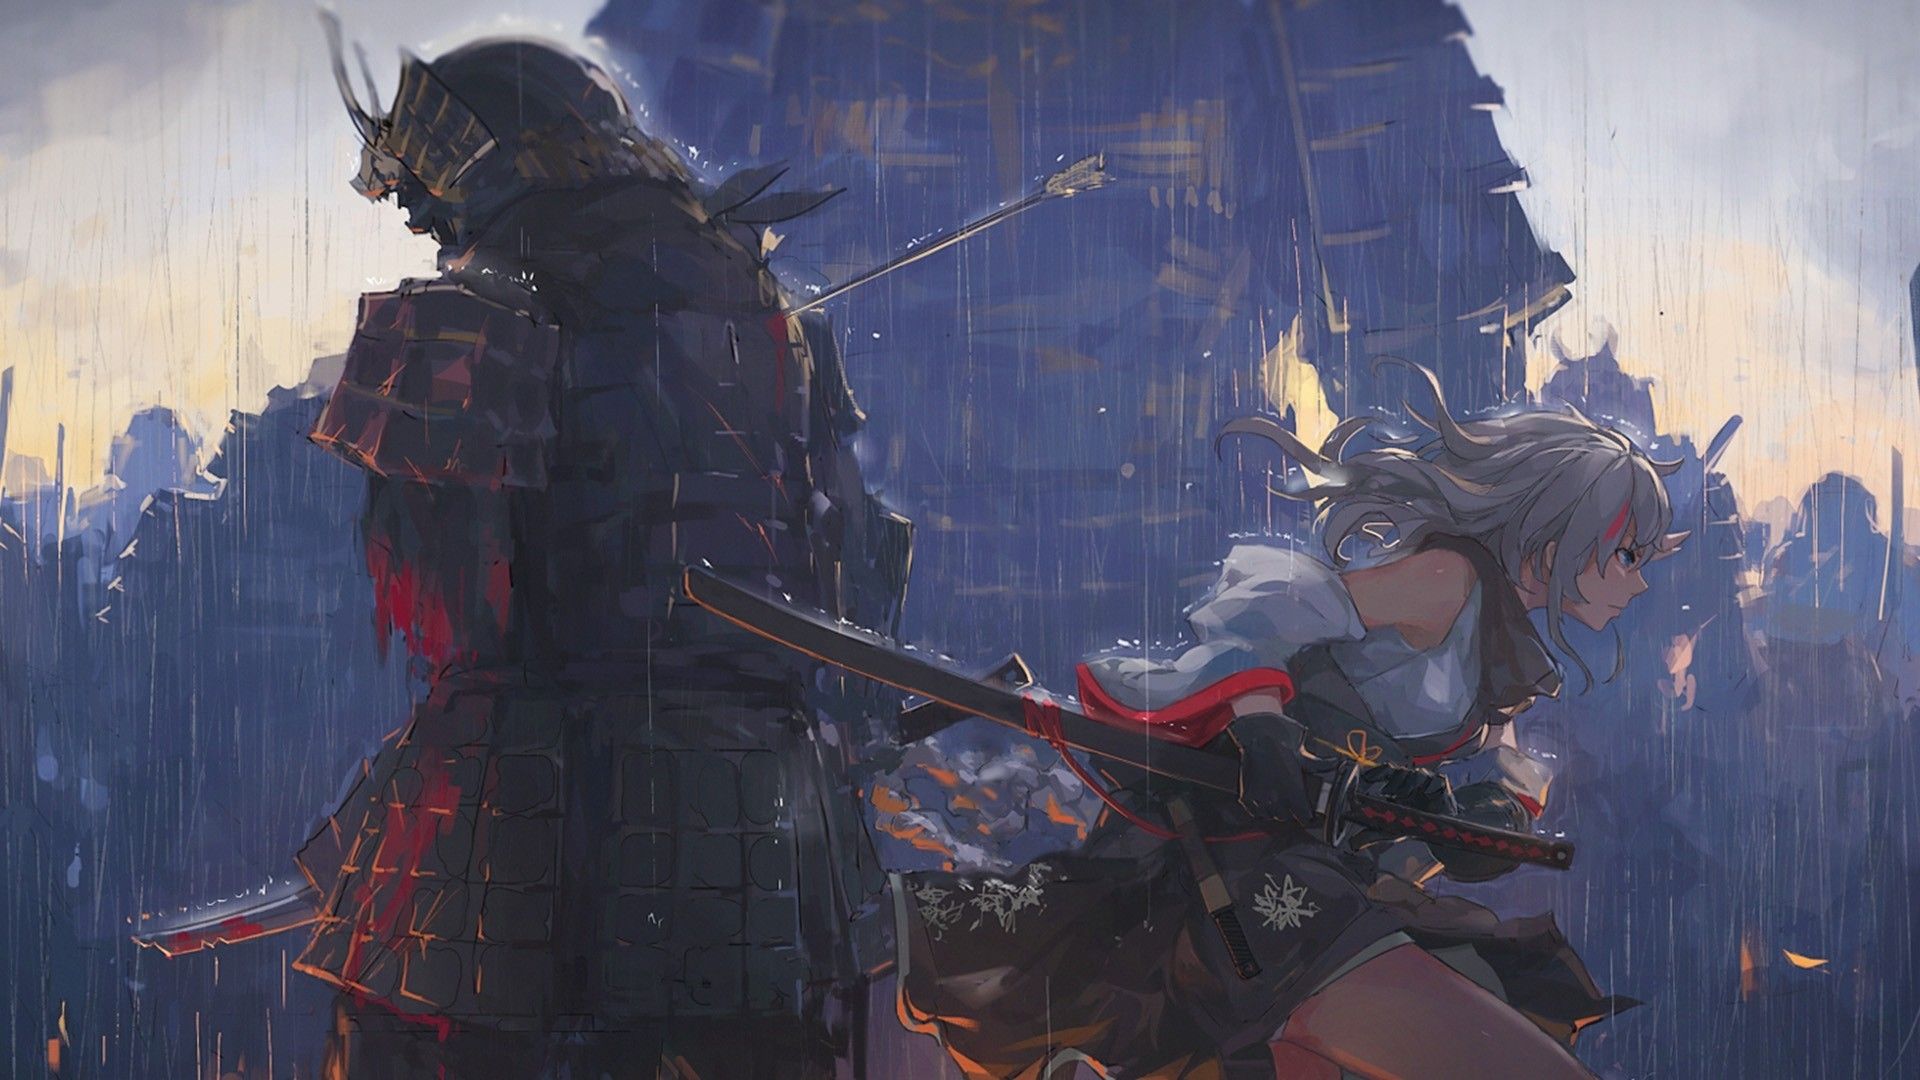 Download 1920x1080 Anime Girl, Samurai, Battle, Sword, Raining